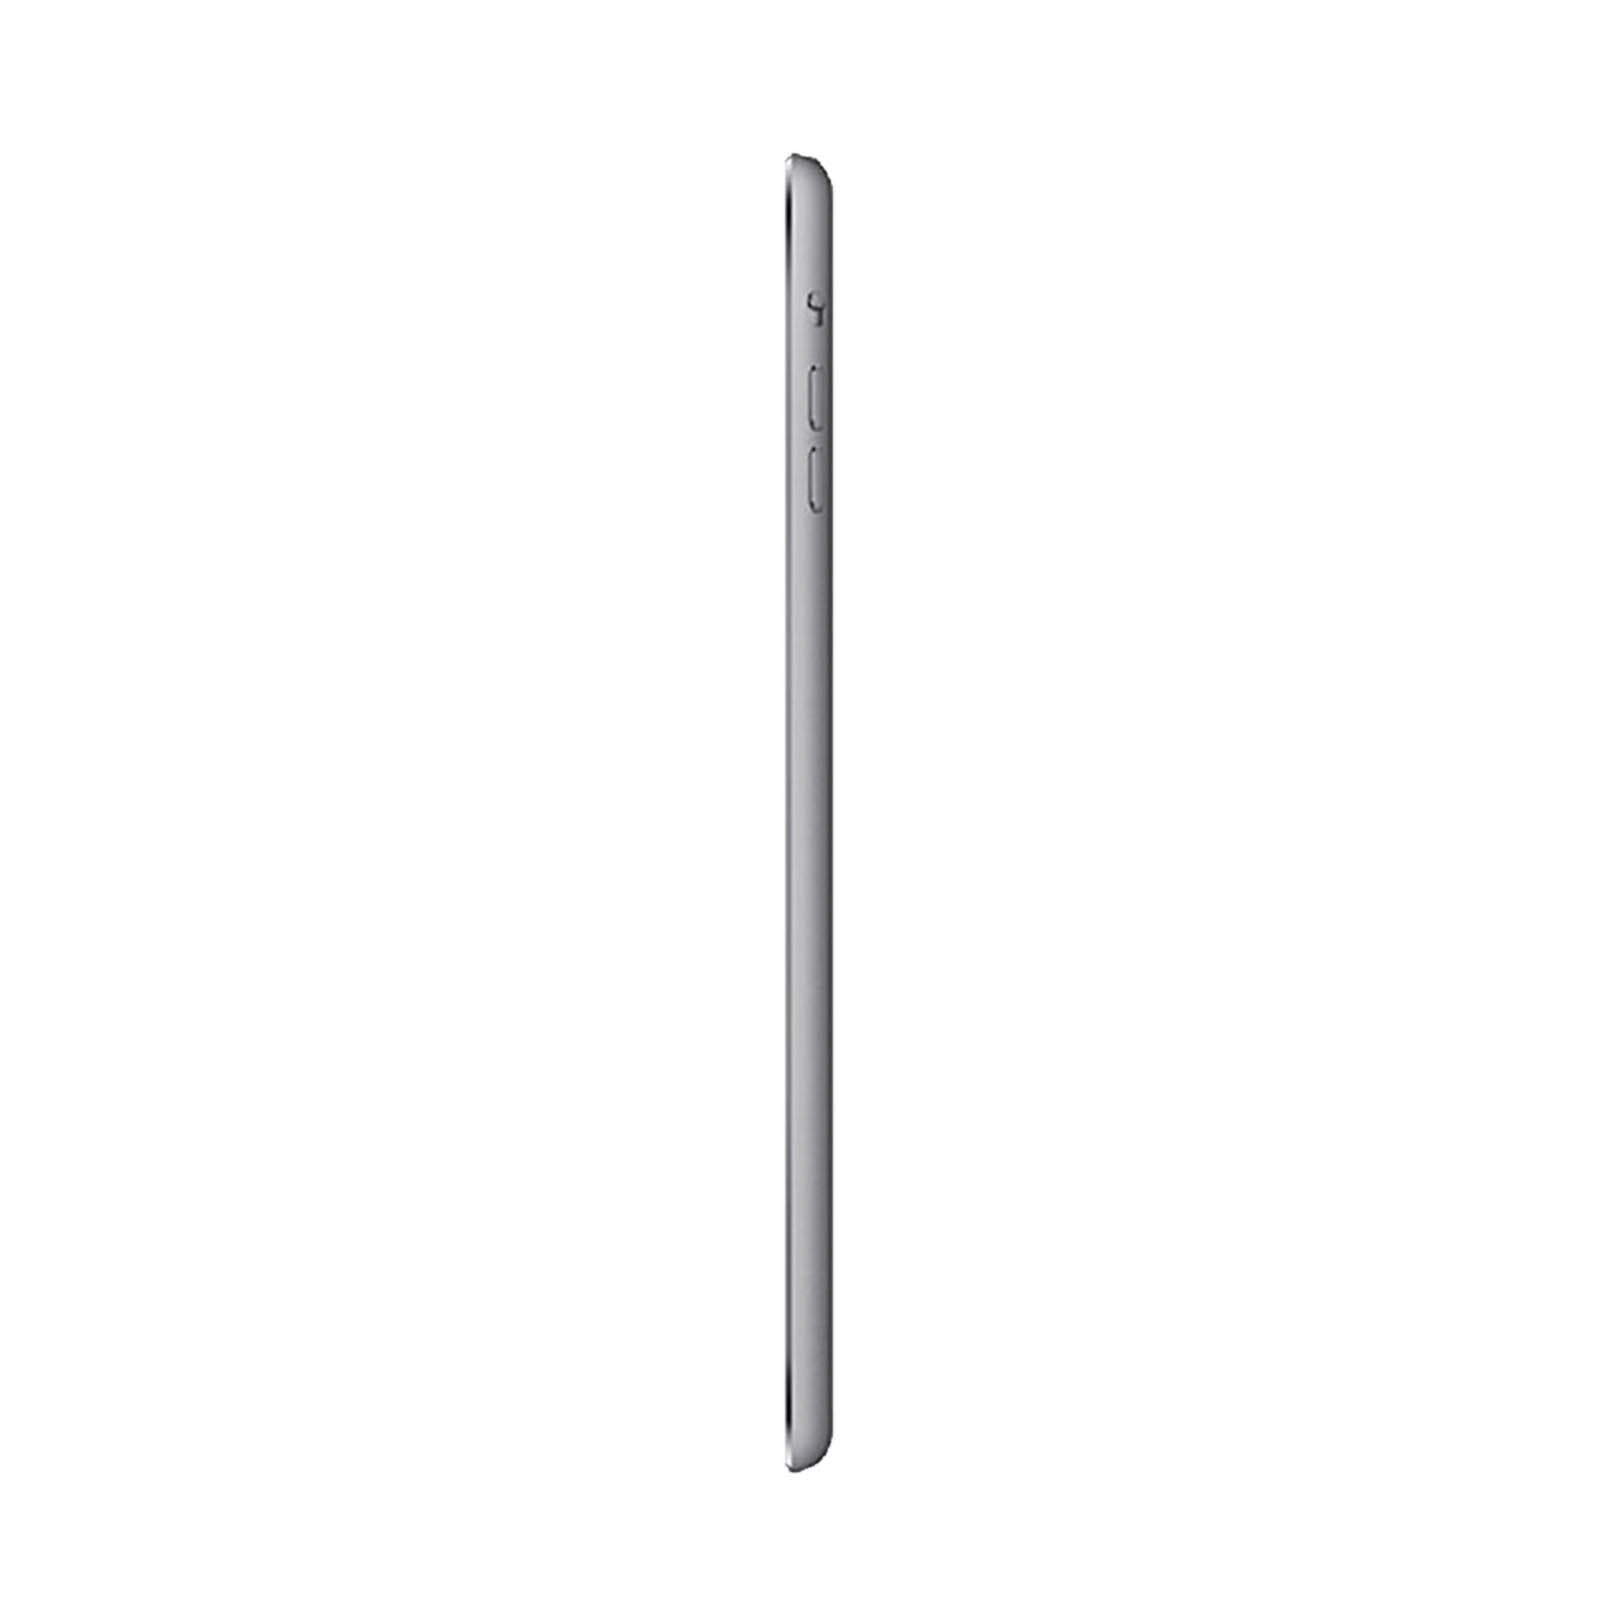 Apple iPad mini 3 16GB Space Grey Pristine- Unlocked